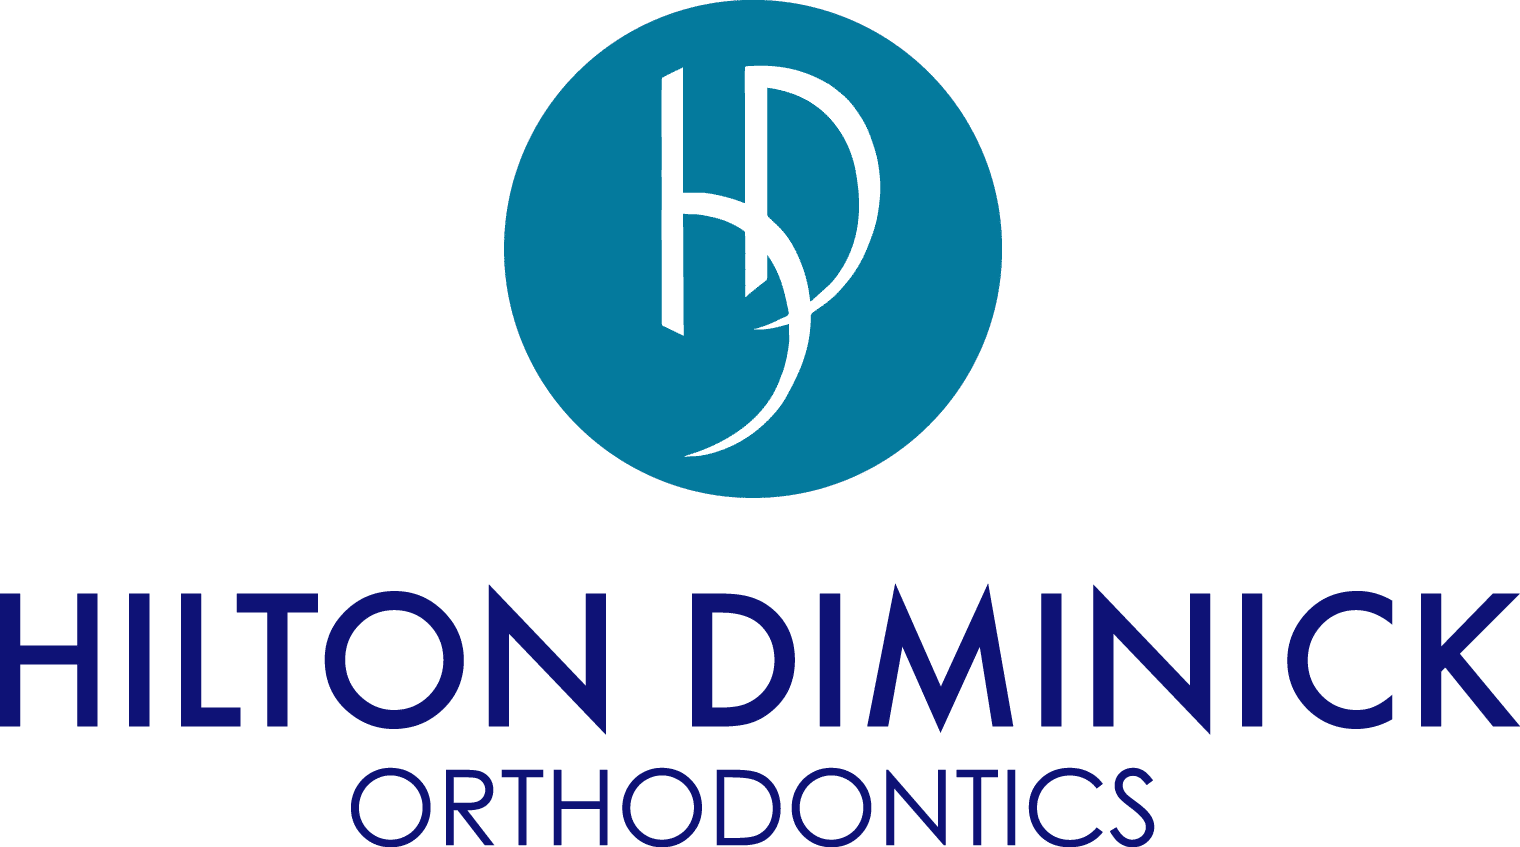 The logo for Hilton Diminick, an orthodontic office in Pennsylvania